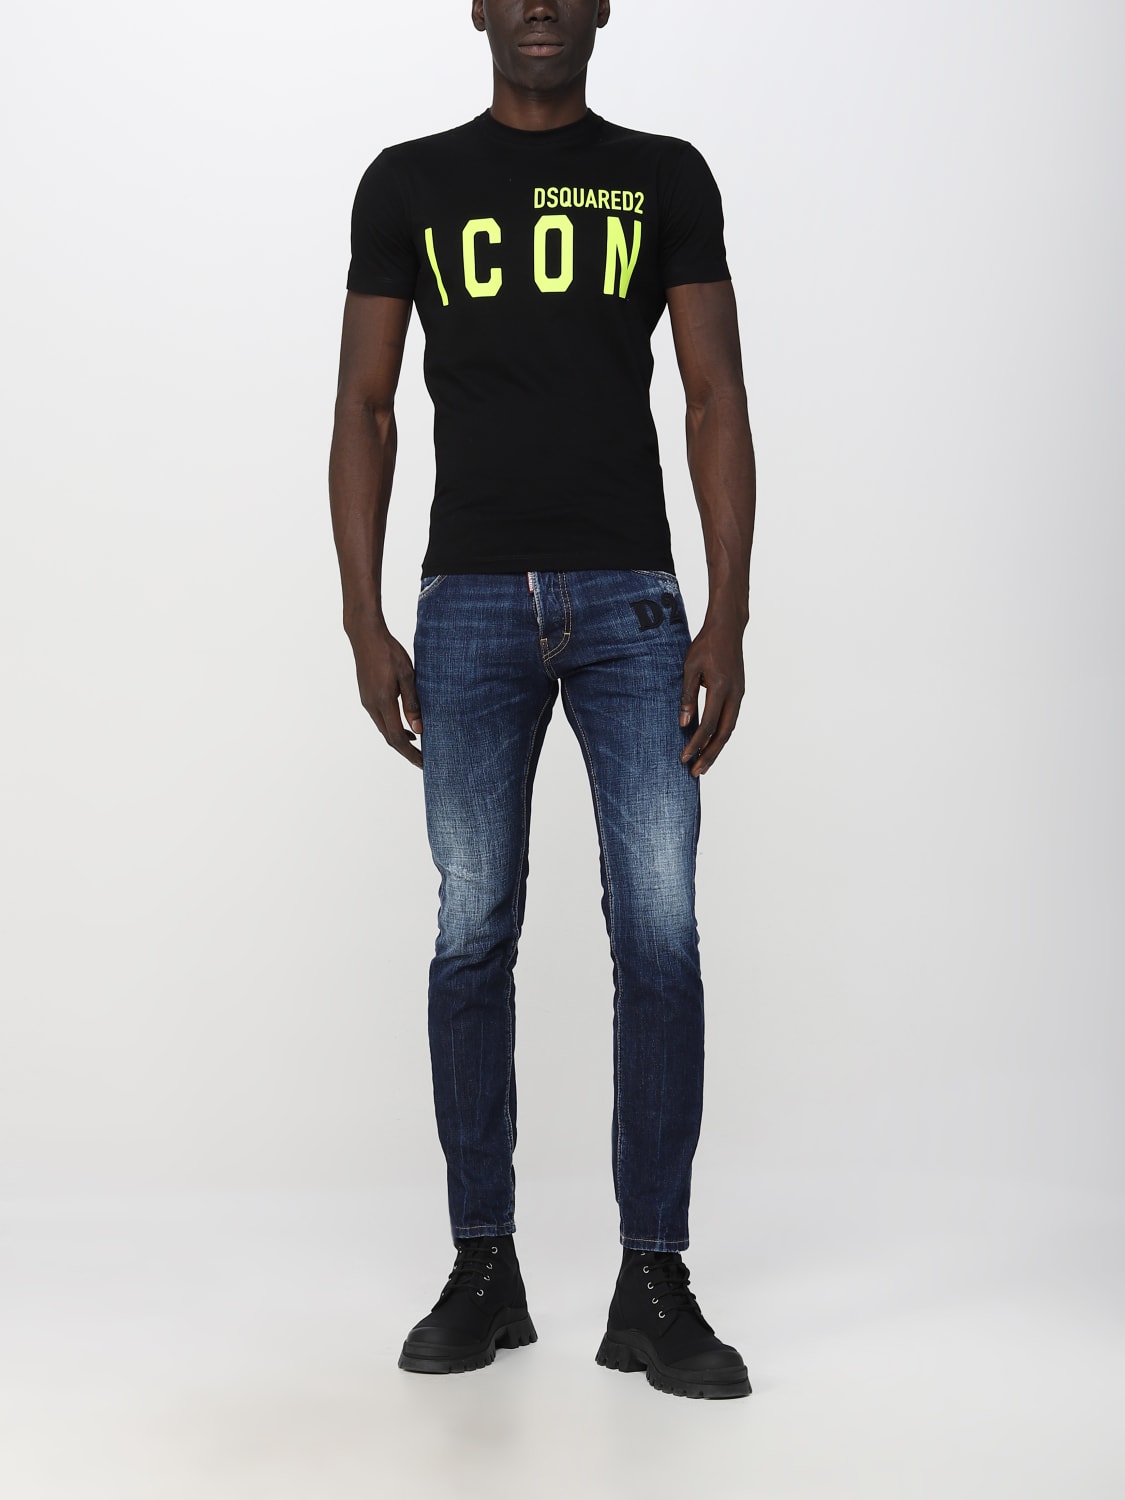 Dsquared2 Outlet: cotton T-shirt - Black 1  Dsquared2 t-shirt  S79GC0068S23009 online at